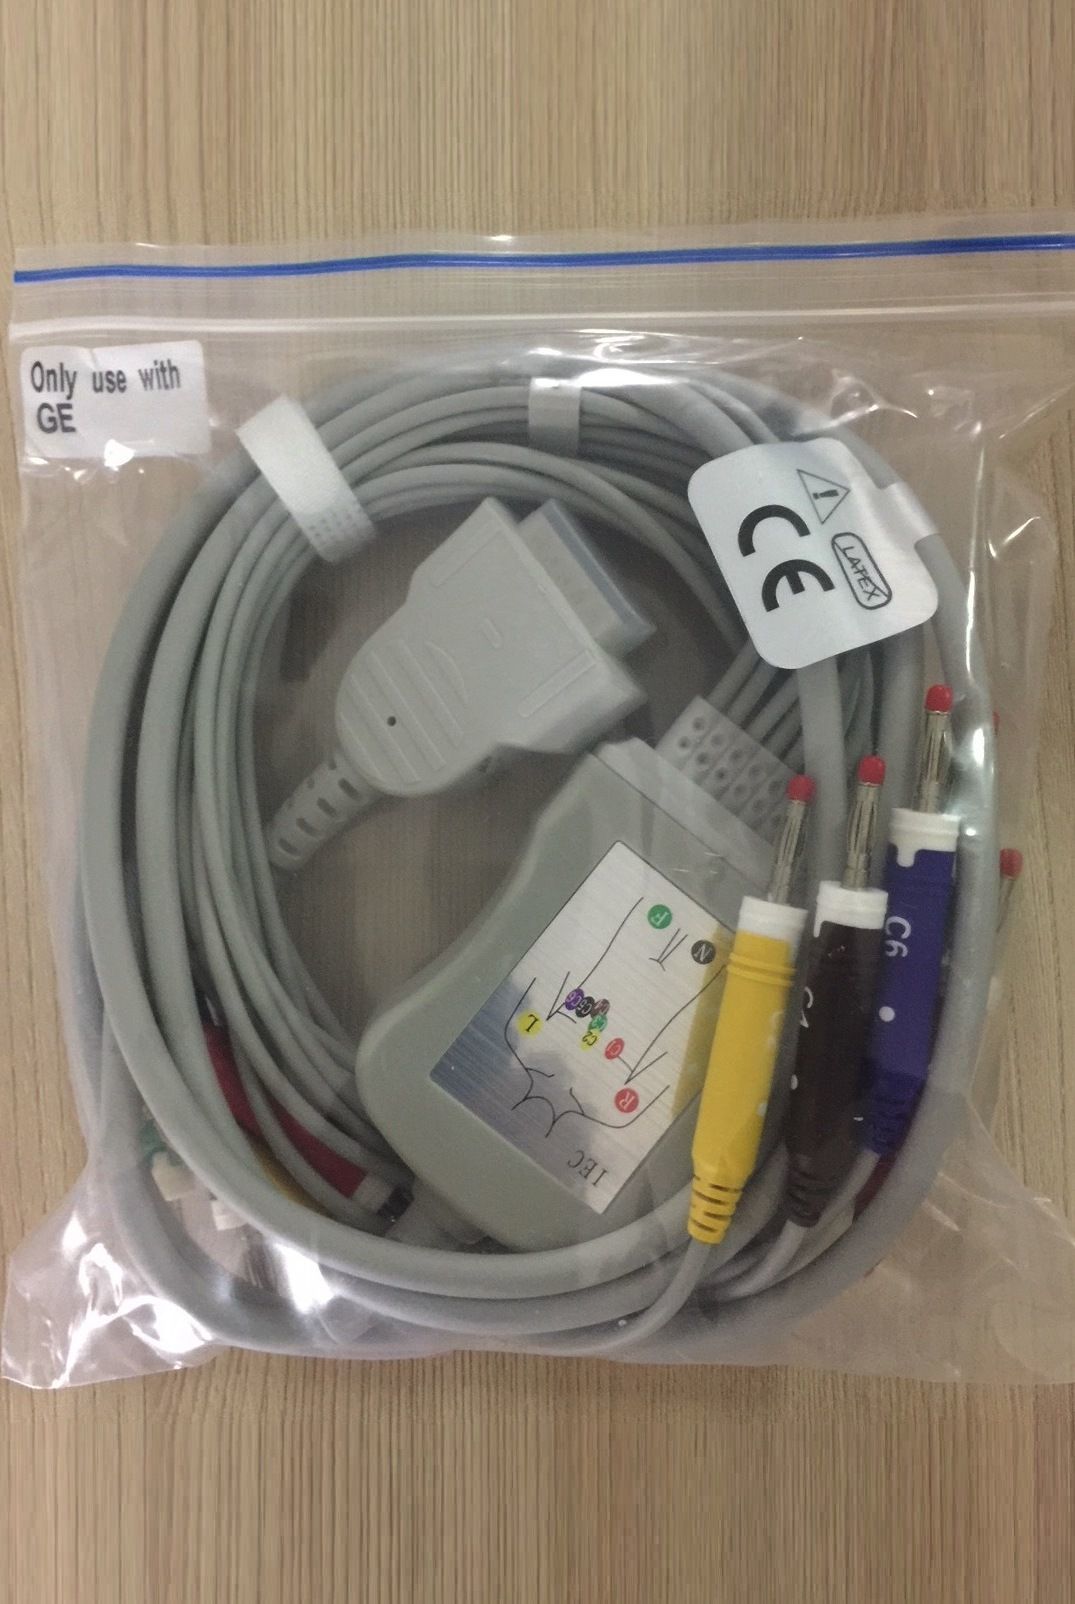 EKG Cable for GE Mac-1200_สายอีเคจีสำหรับเครื่องวัดบันทึกคลื่นไฟฟ้าหัวใจ GE Mac